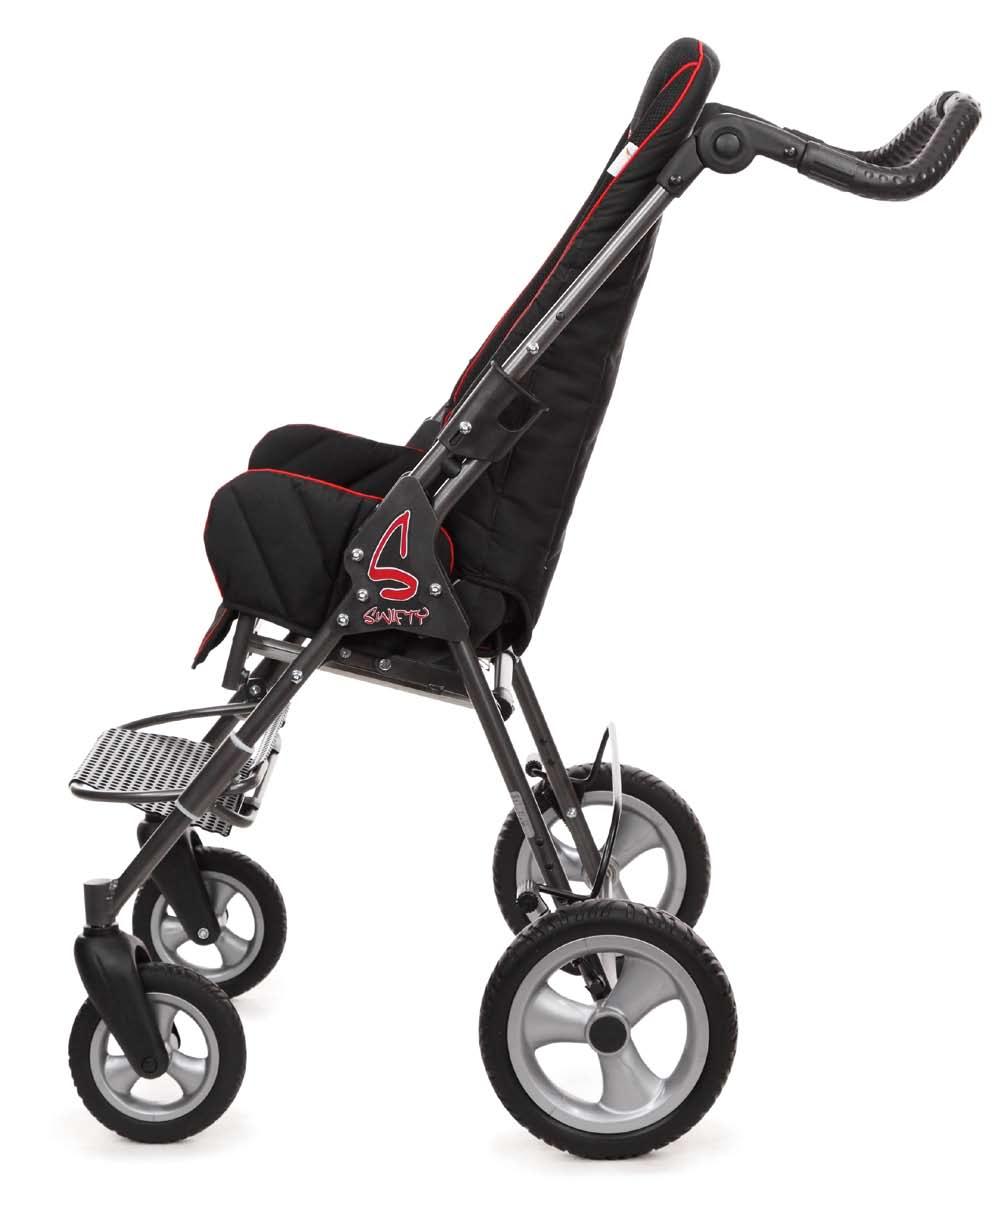 Rehab stroller Swifty Technical data Swifty Seat depth 22-28.5 cm / 8.6-11.2" Seat width 34 cm / 13.4" Back height 62 cm / 24.4" Lower leg length 16-33 cm / 6.